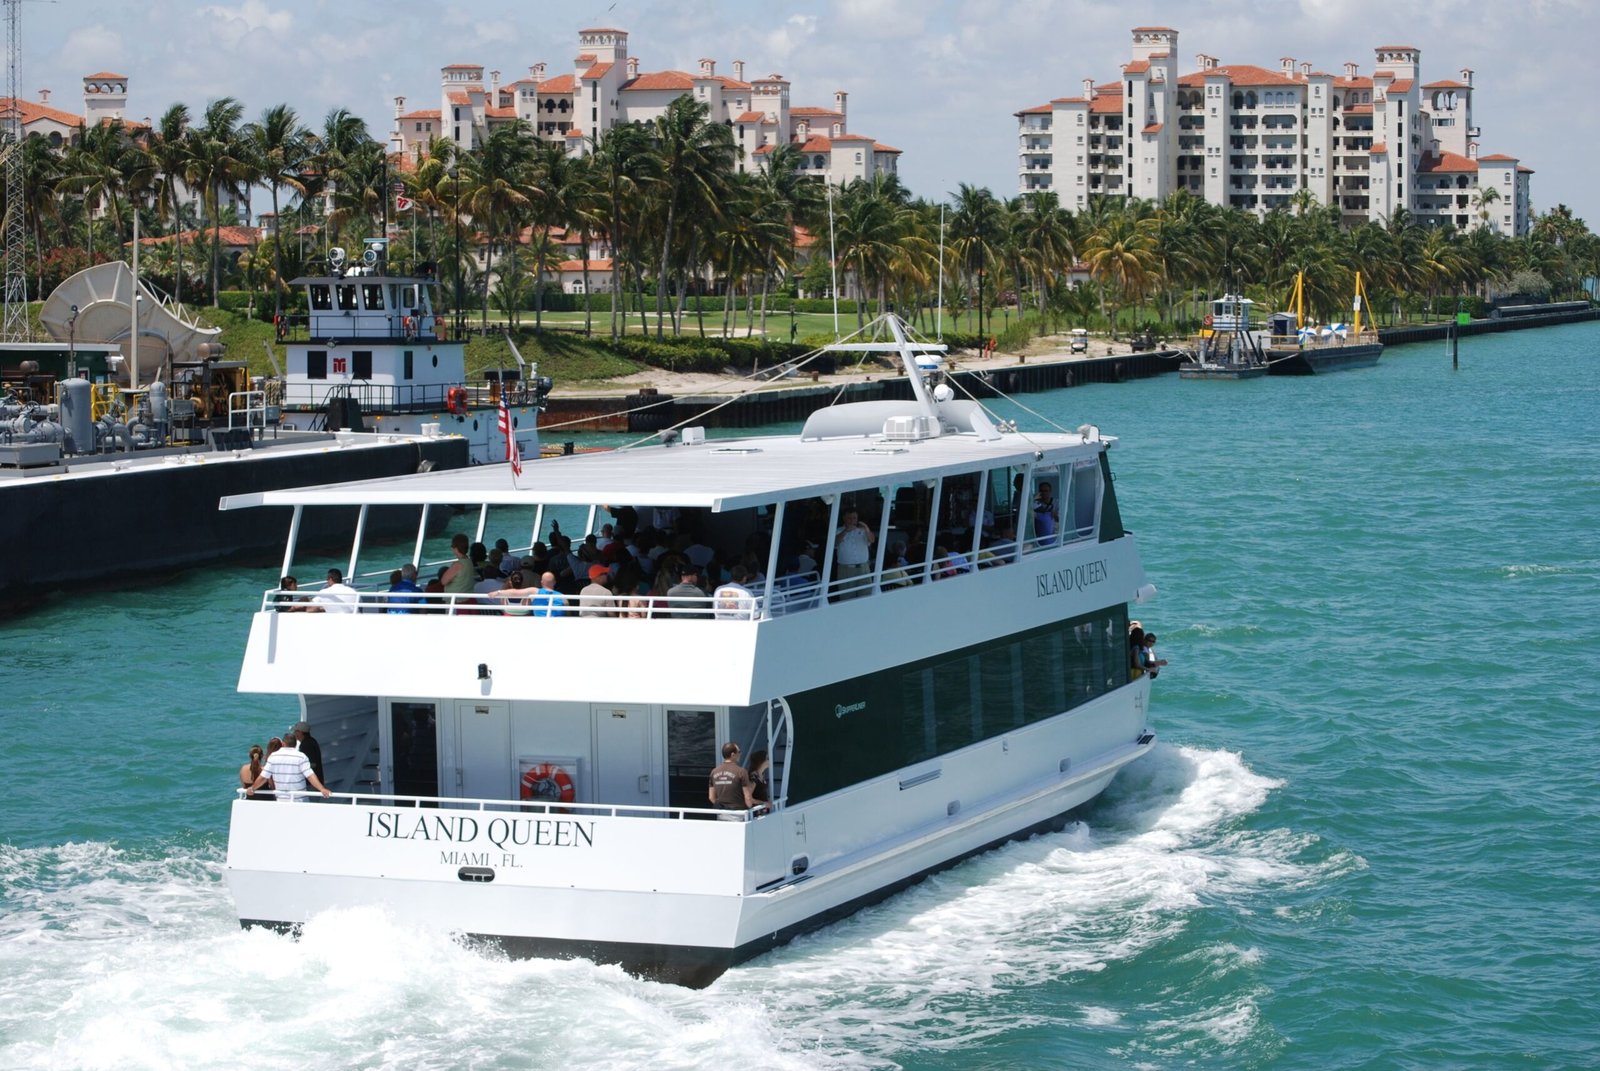 Queen island. Miami Boat Tour. Miami Cruise игра. Водная прогулка заливу Бискейн. Miami Sightseeing Cruise.